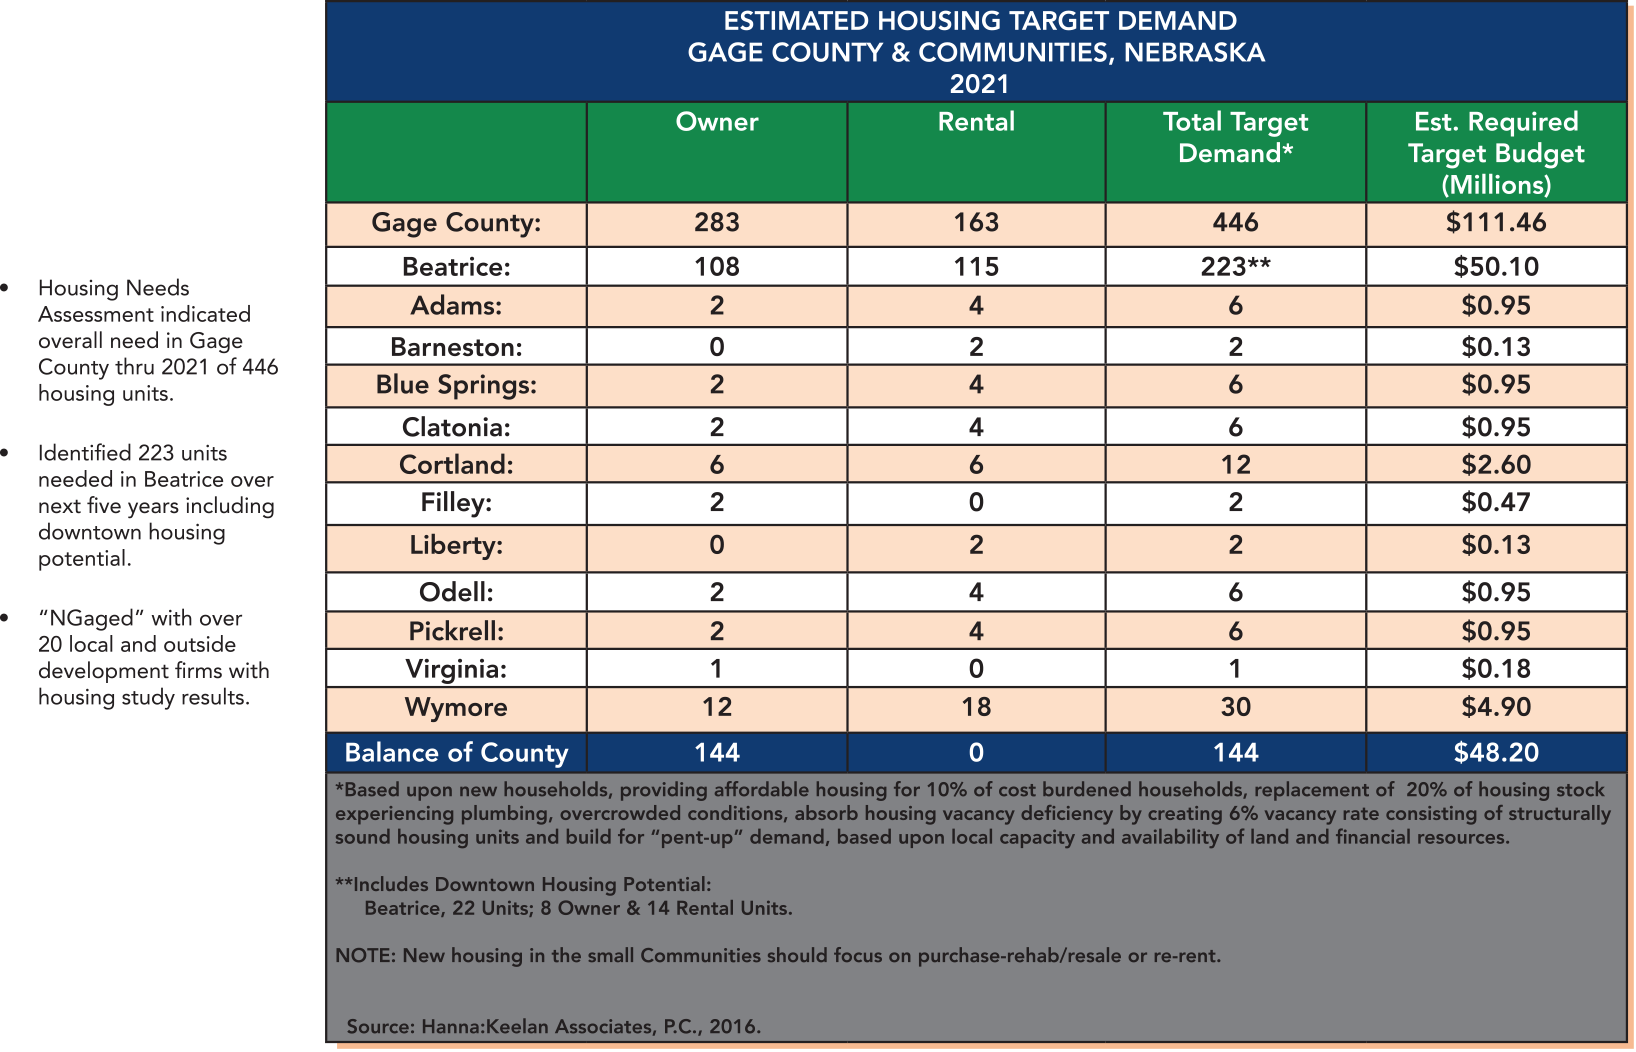 housing chart for Estimated Housing Target Demand in Gage County & Communities, Nebraska